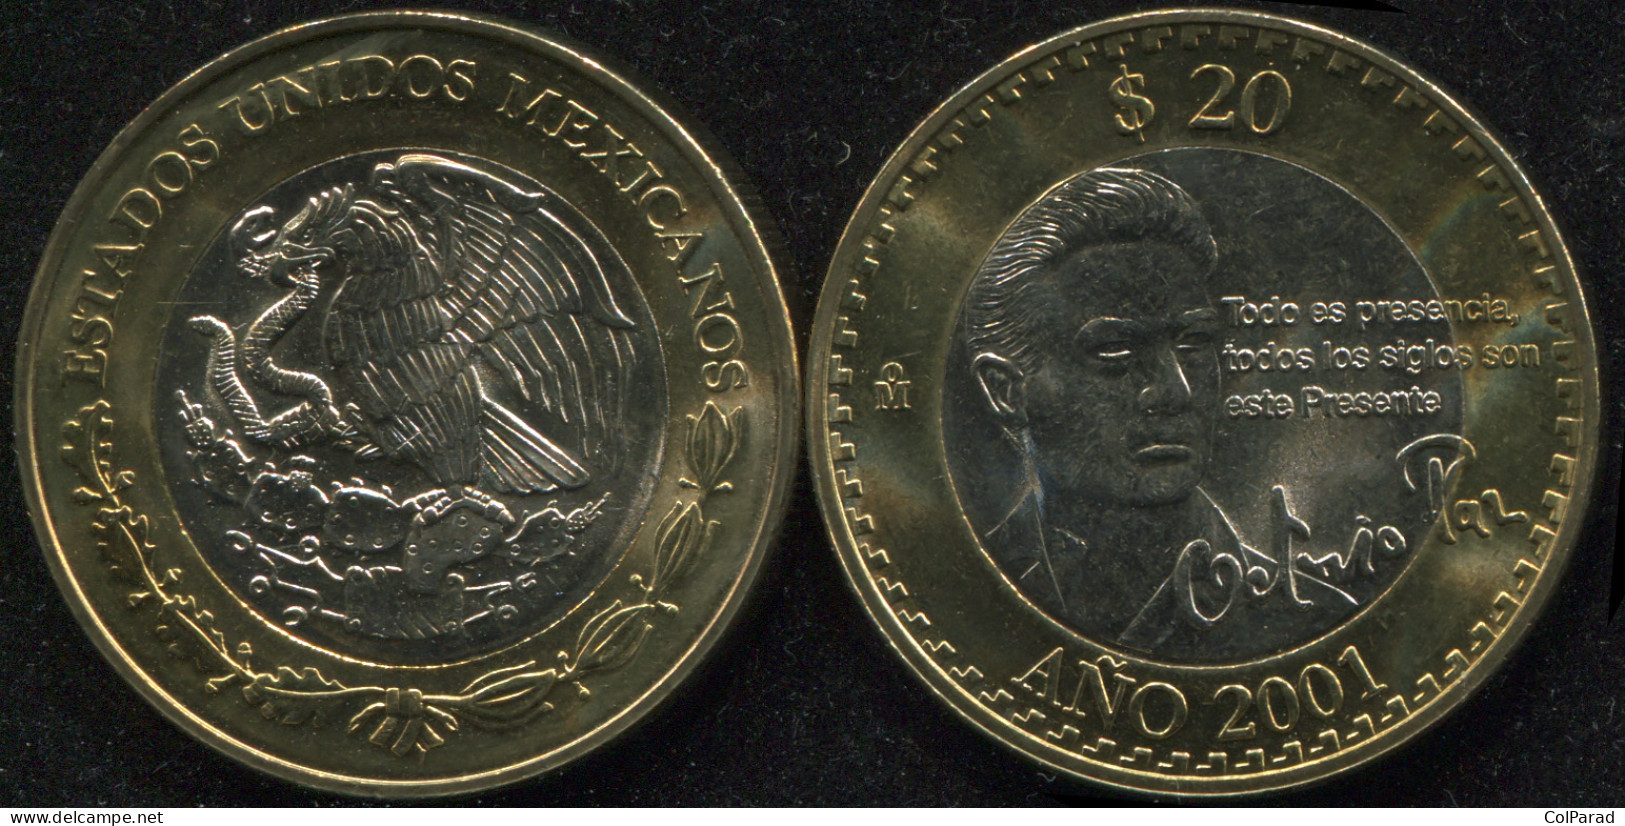 MEXICO COIN 20 PESOS - KM#638 Bi-Metallic Unc - 2001 - Octavio Paz, Poet - Mexique